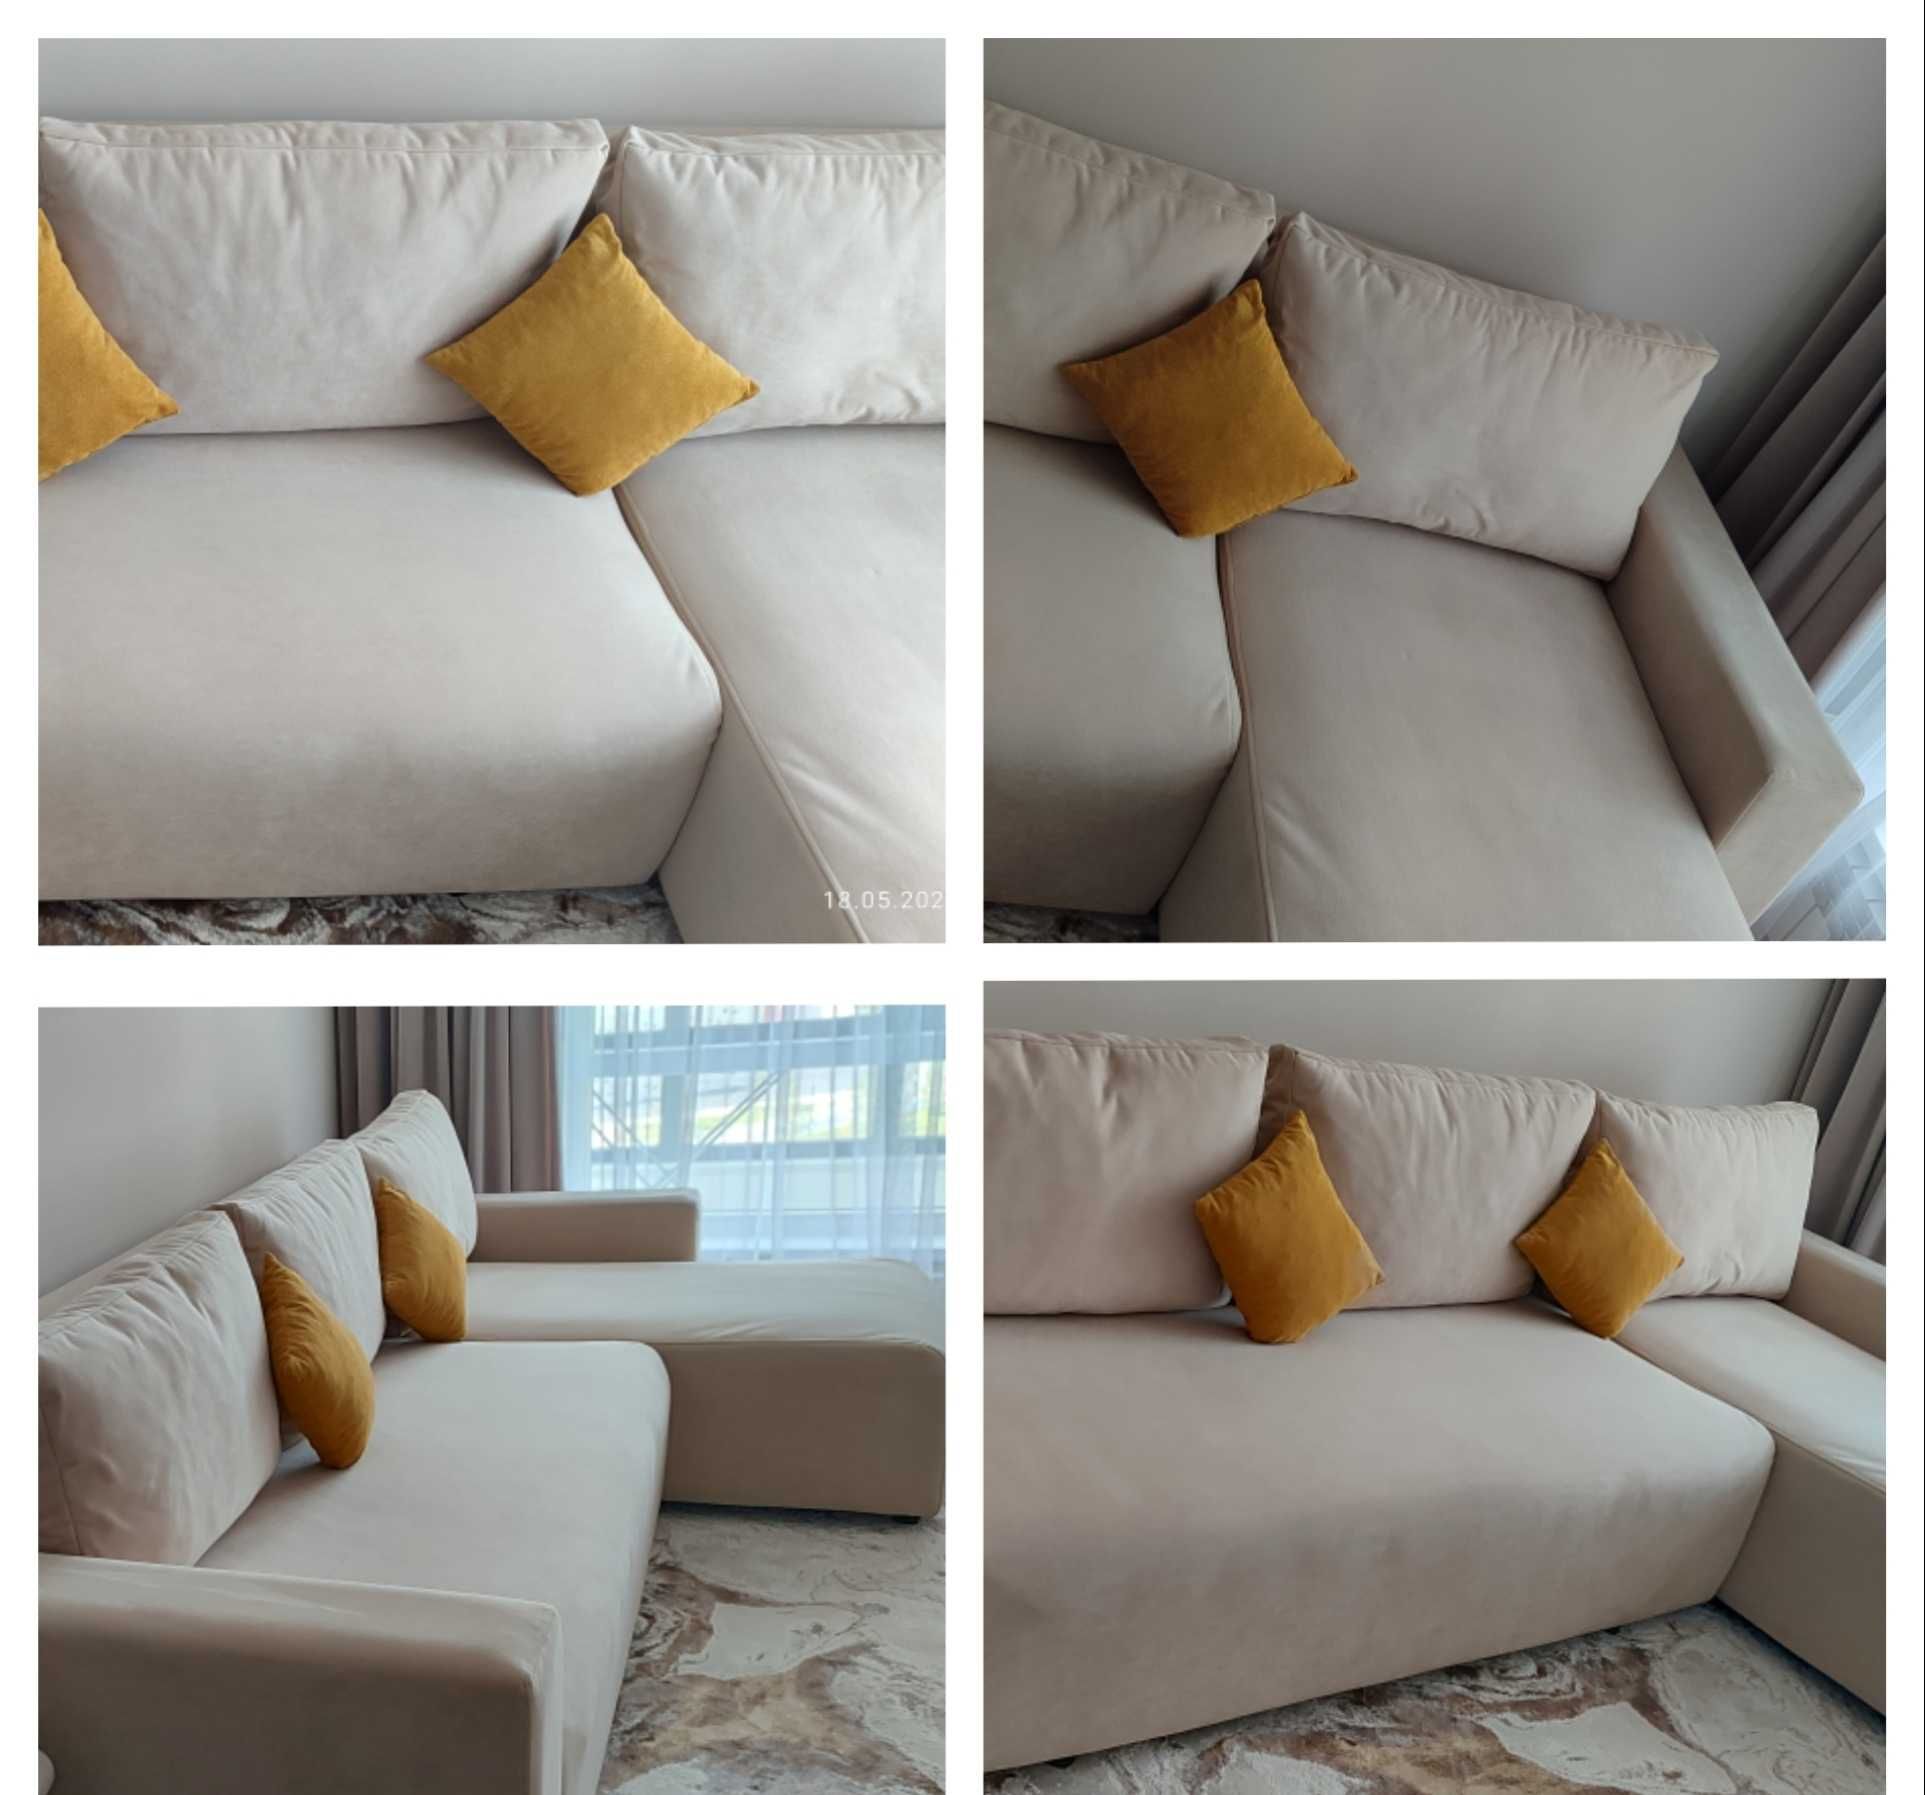 Продается диван светло бежевого цвета